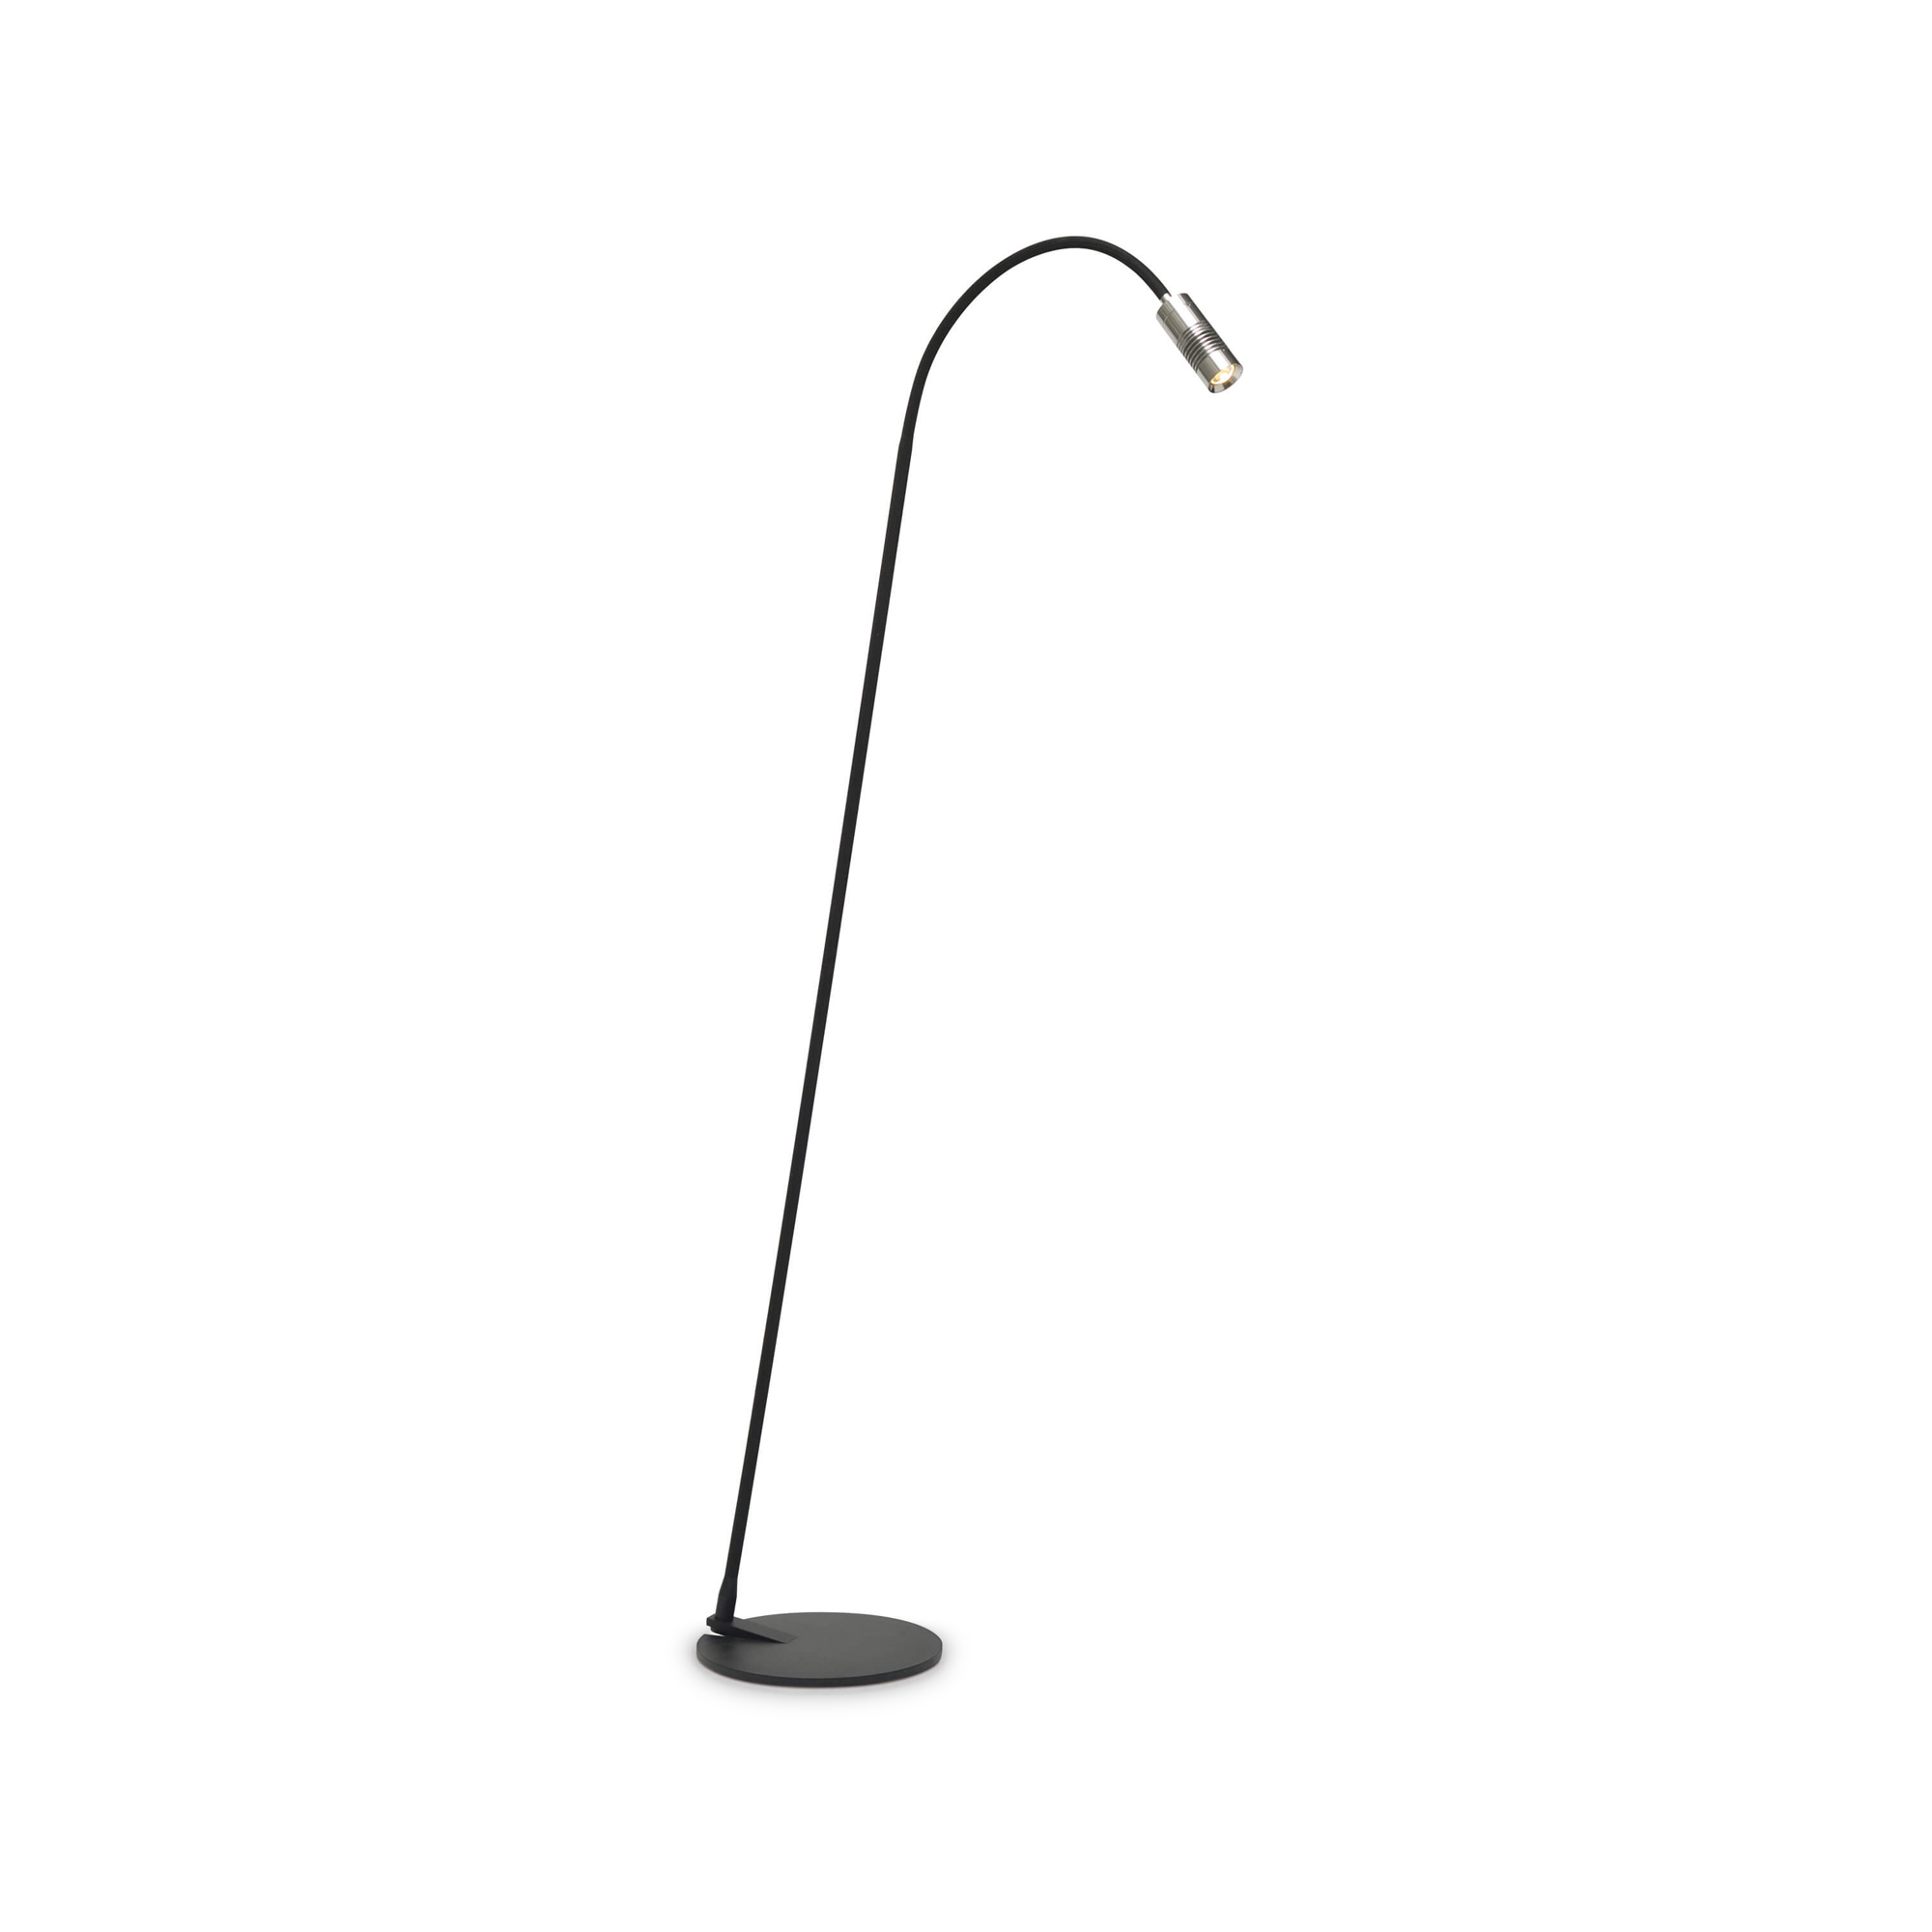 OLIGO LED Floor Lamp A LITTLE BIT CRI90 black 3000K 500lm